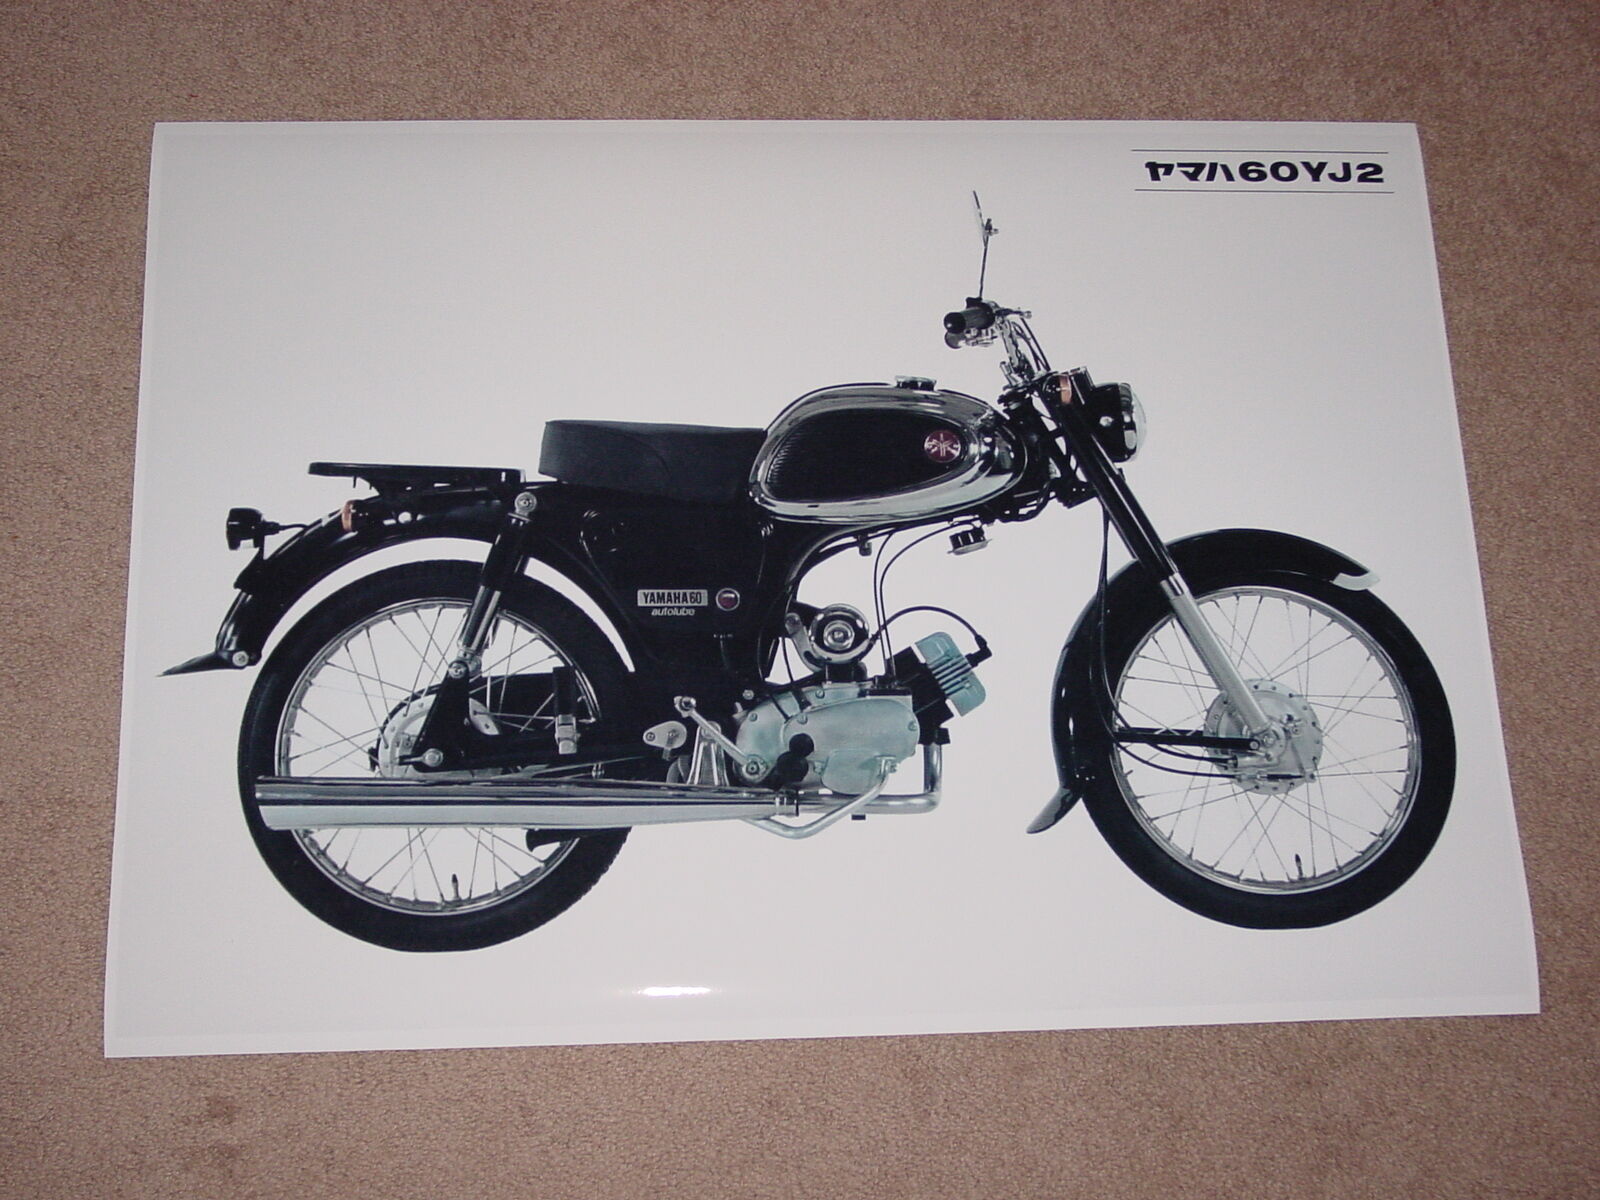 1960\'s YAMAHA YJ2 60 VINTAGE MOTORCYCLE POSTER PRINT 24x36 9 MIL PAPER